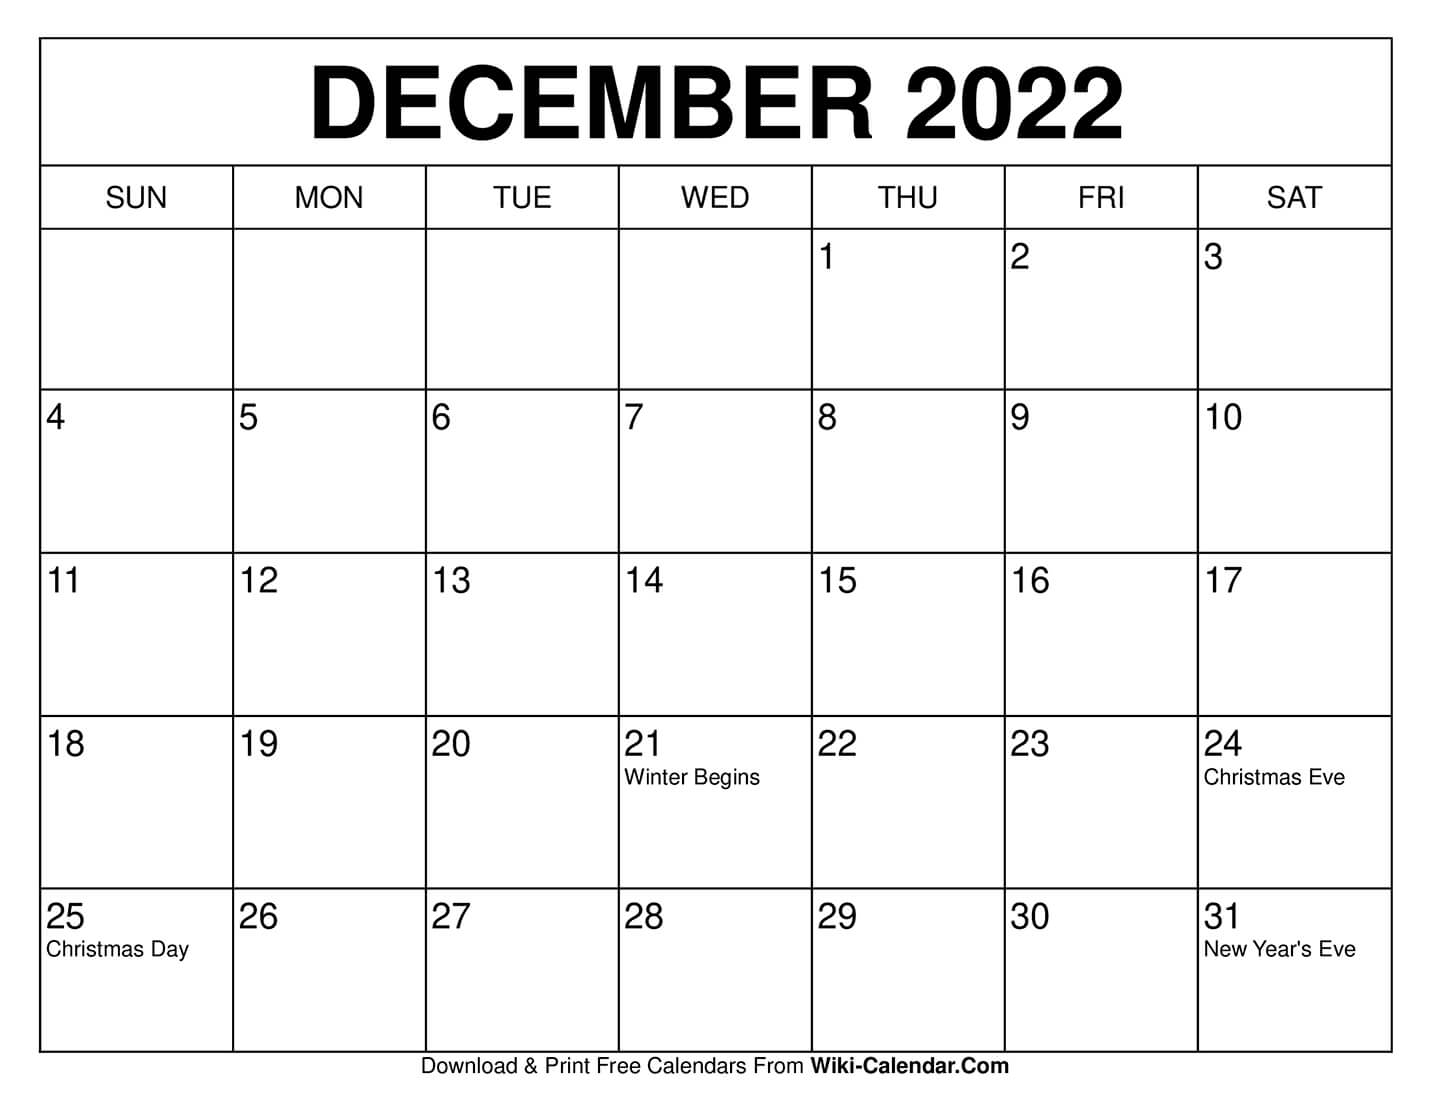 Free Printable December 2022 Calendar With Holidays